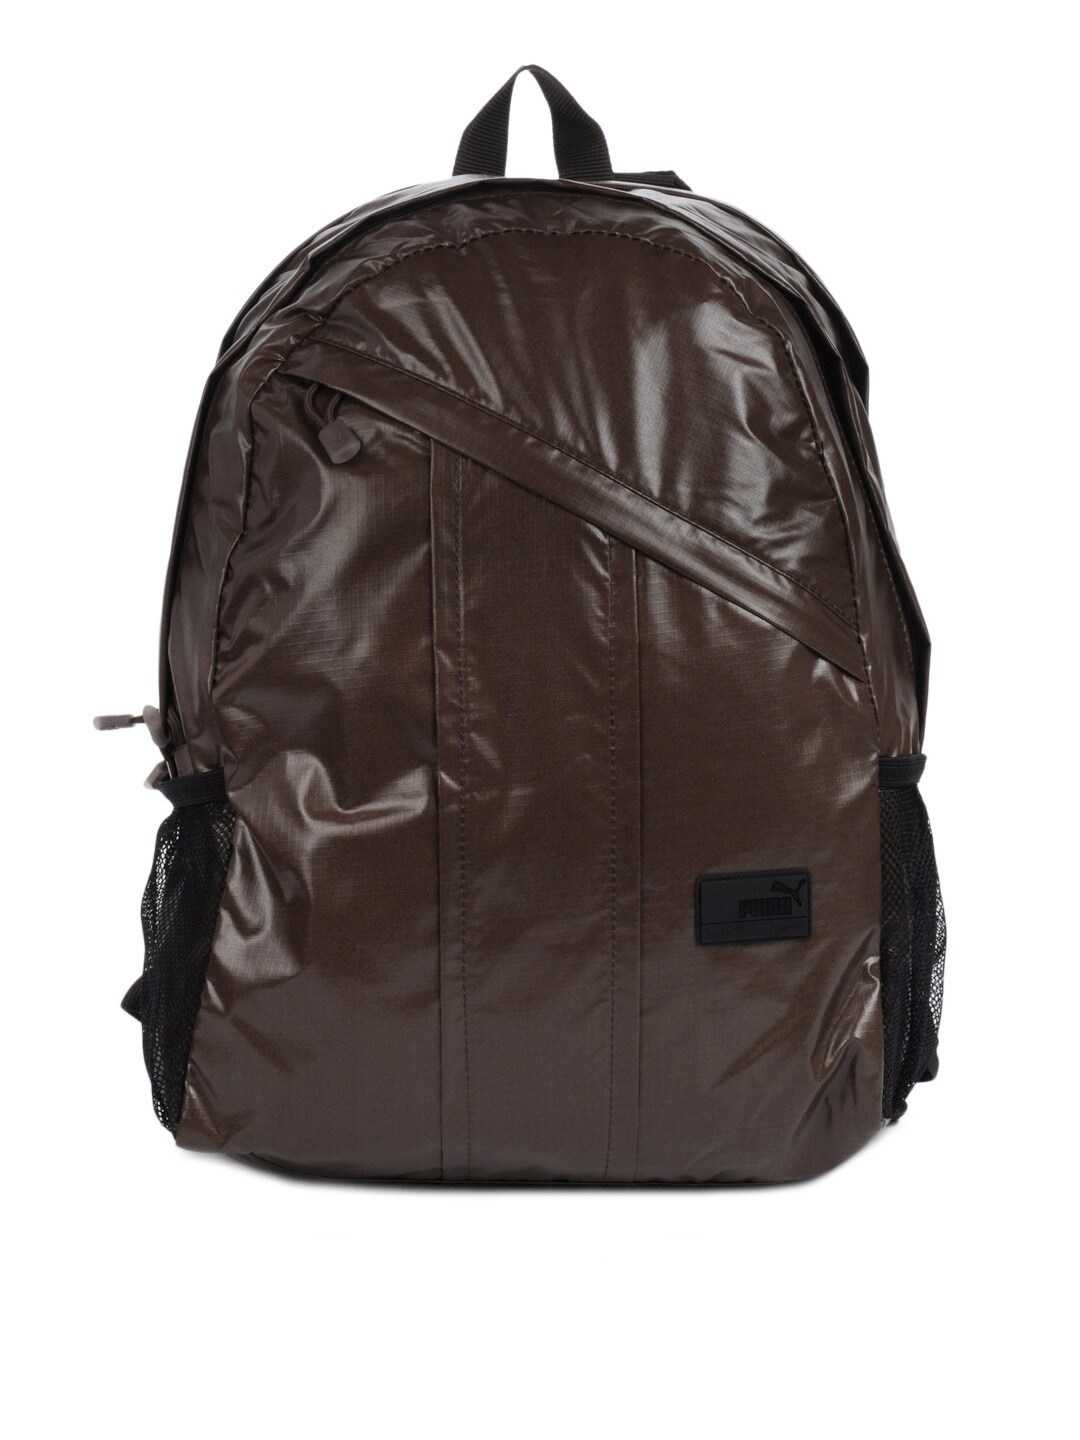 Puma Unisex Brown Backpack